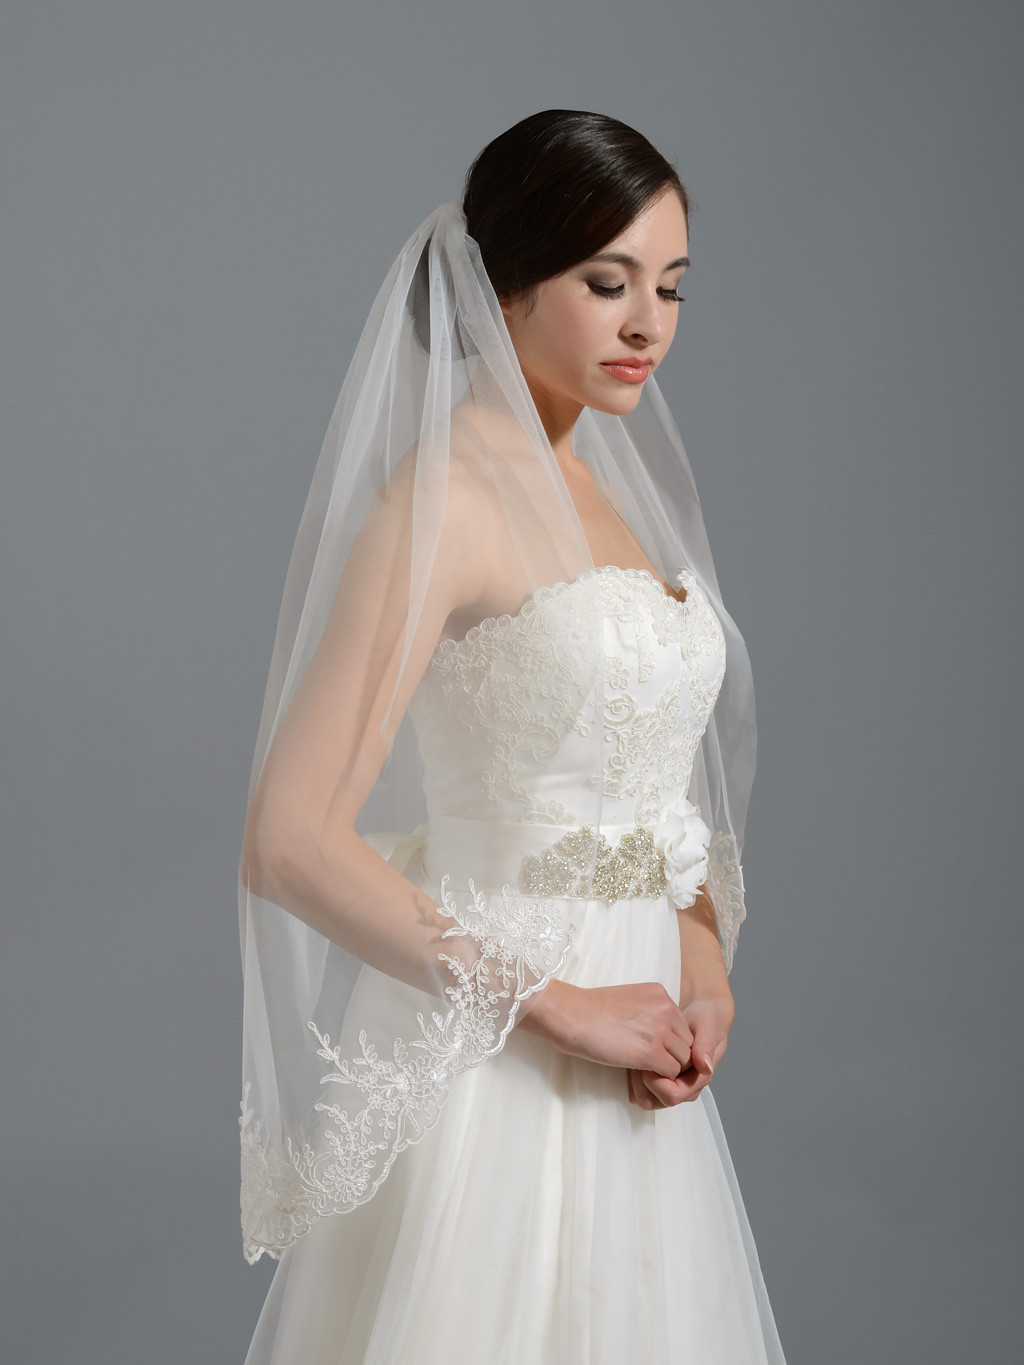 Ivory Wedding Veils For Sale
 Ivory elbow alencon lace wedding veil V037 V037